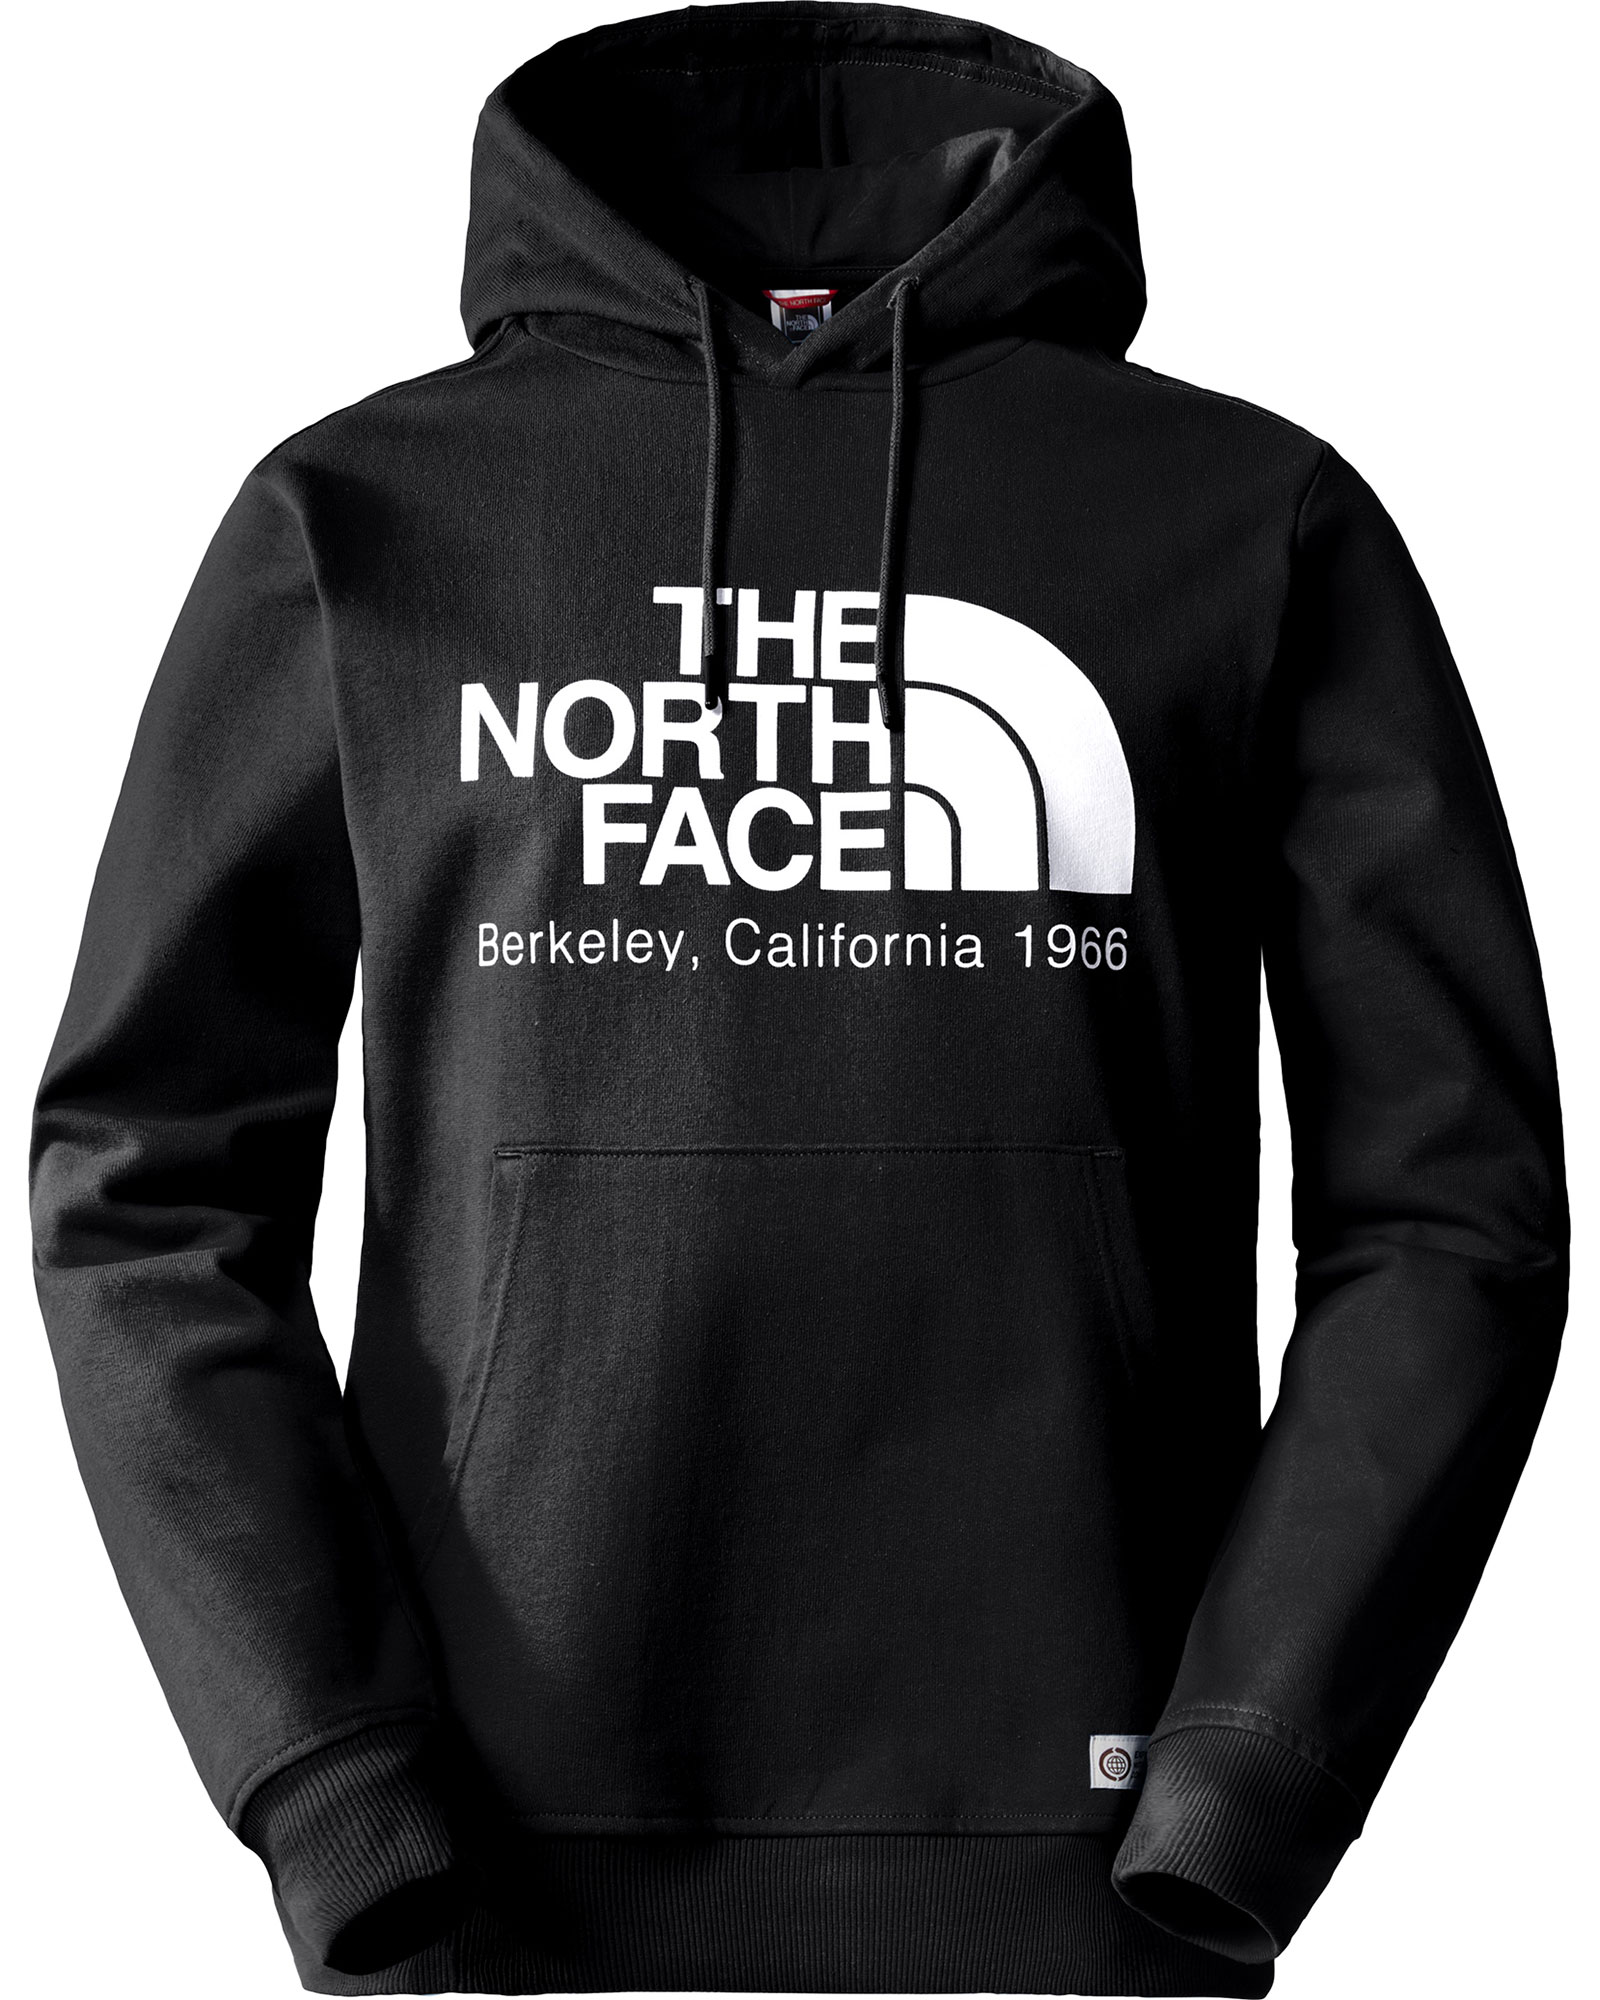 The North Face Men’s Berkeley California Hoodie - TNF Black XS